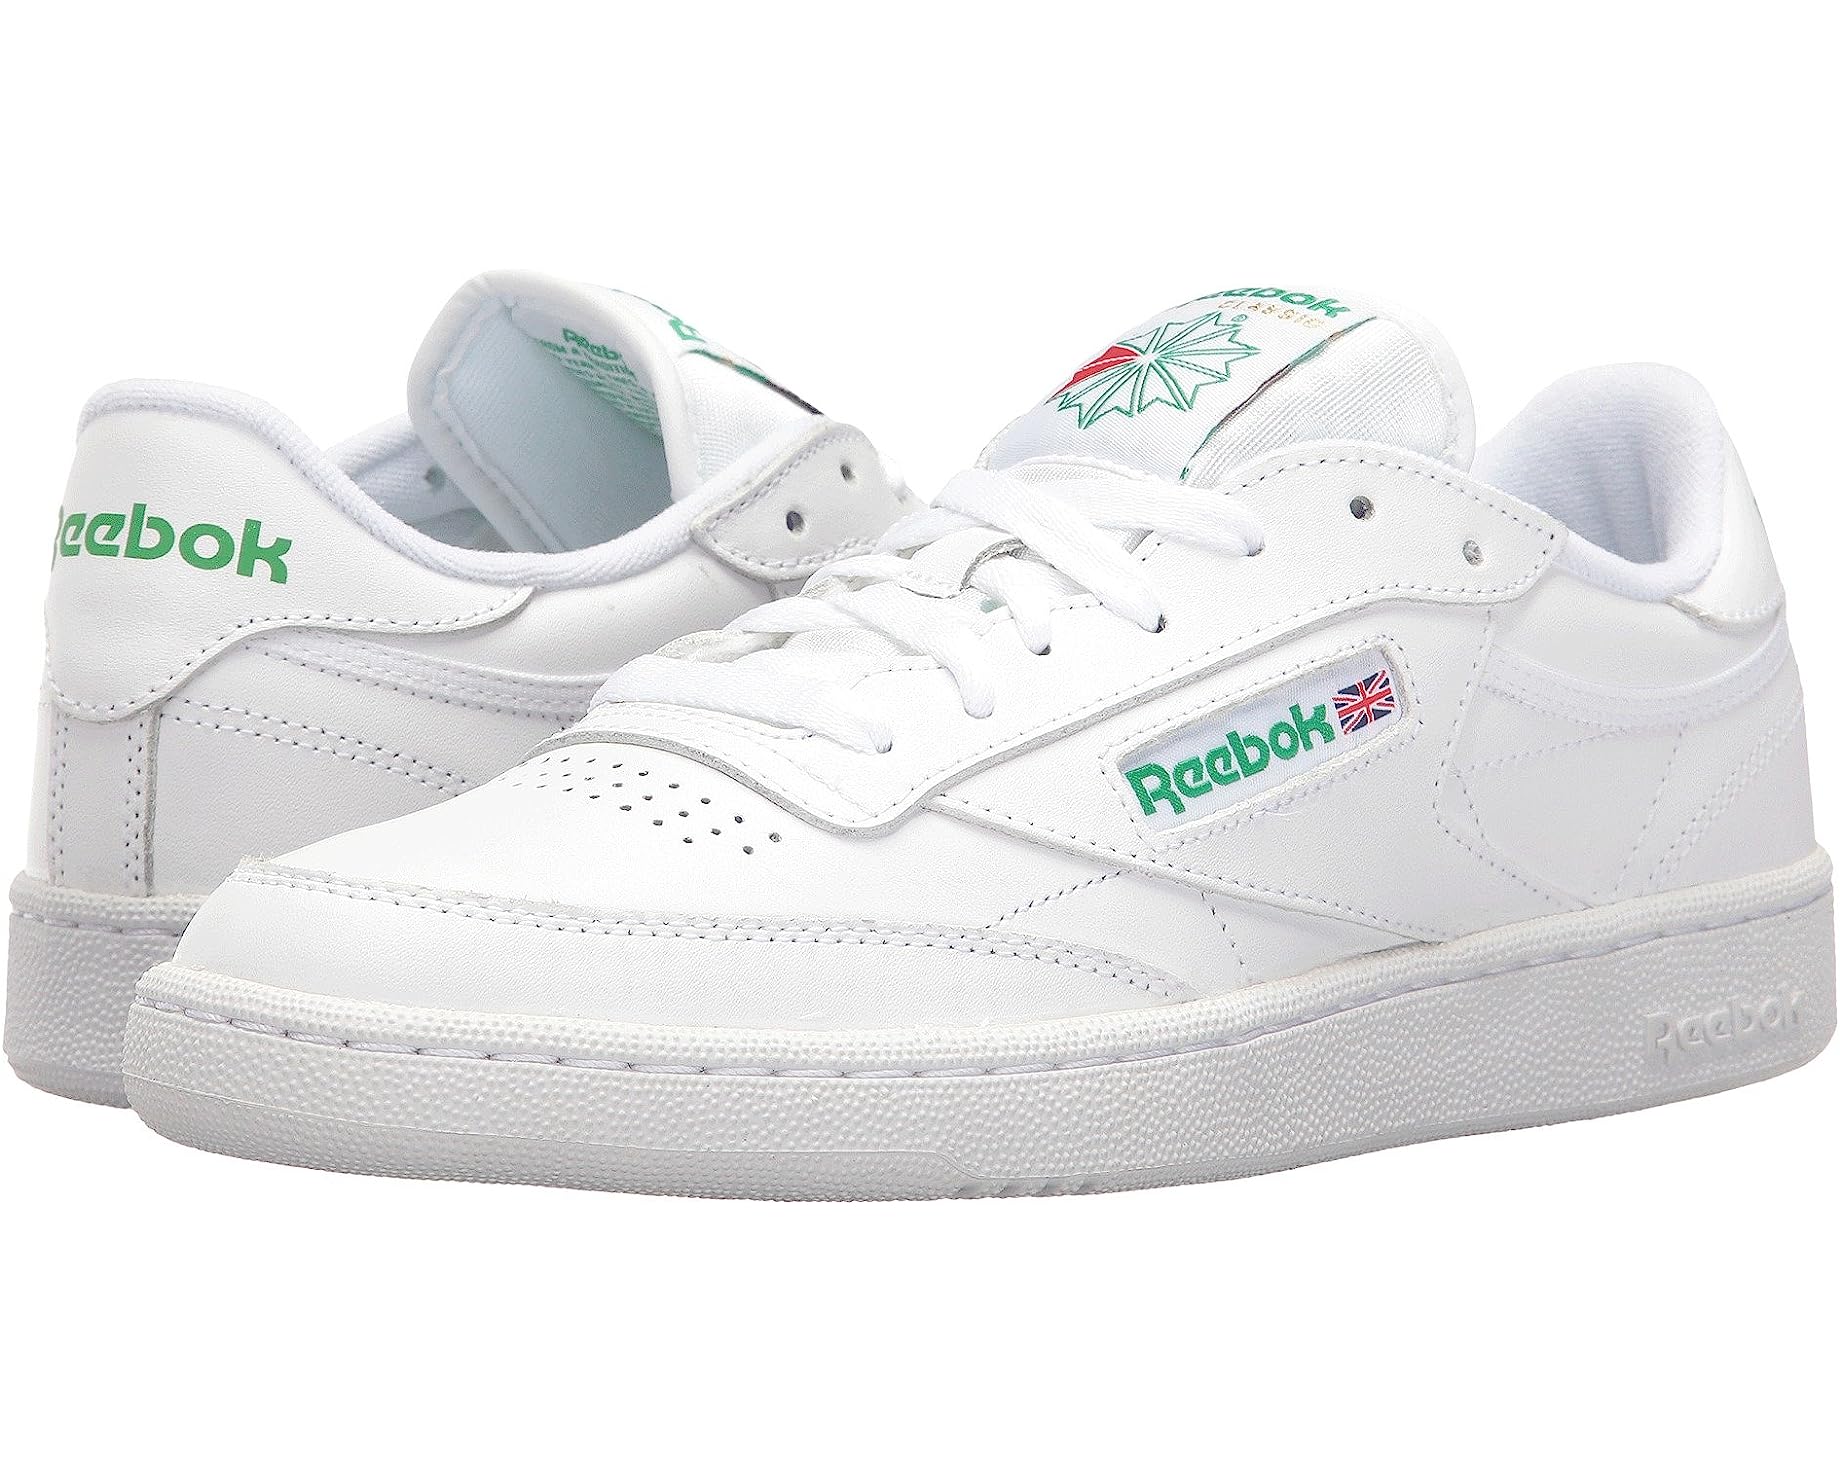 Reebok Brand Shoes